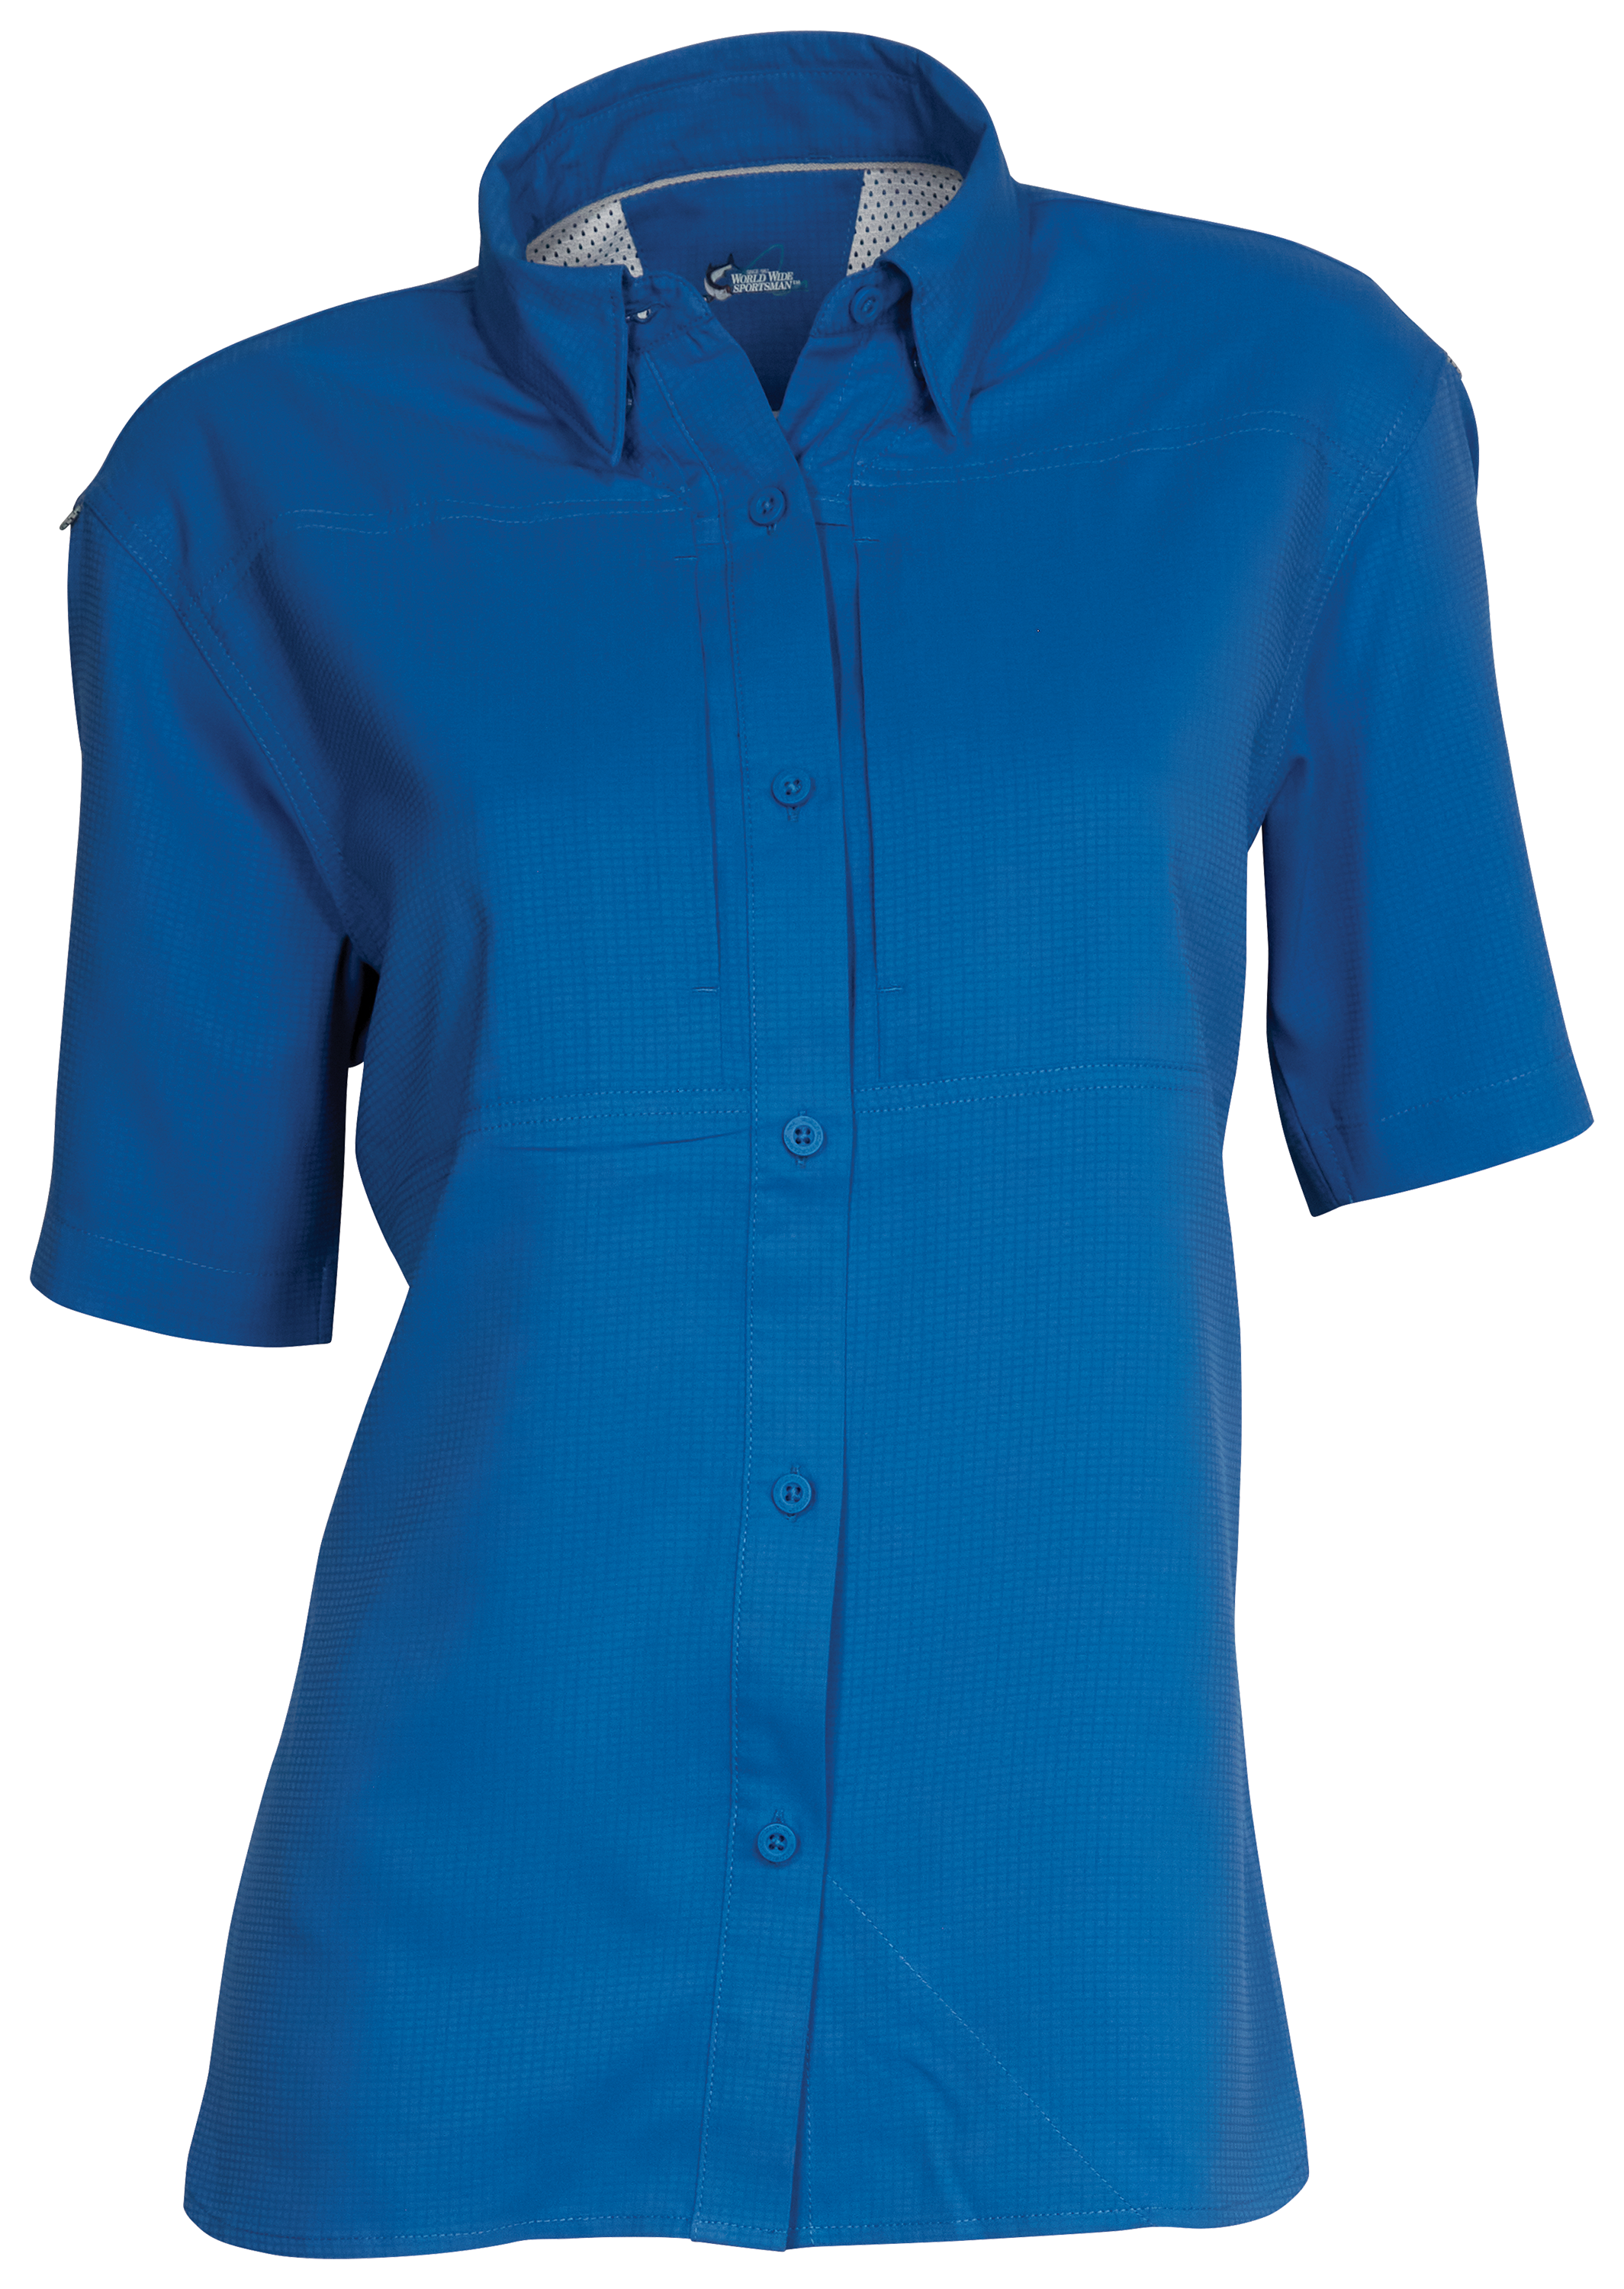 World Wide Sportsman Marina Short-Sleeve Shirt for Ladies - Delft Blue - S